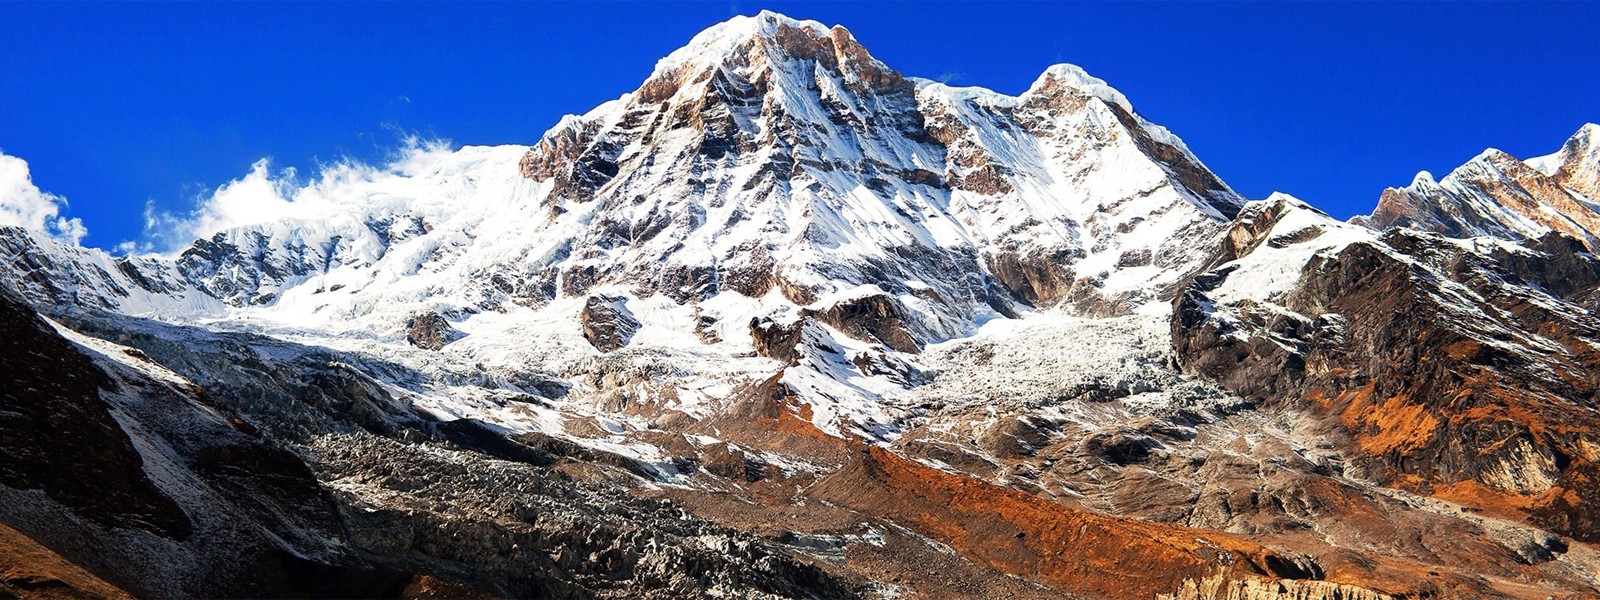 Mount Annapurna South Expedition via Machhapuchhre Base Camp